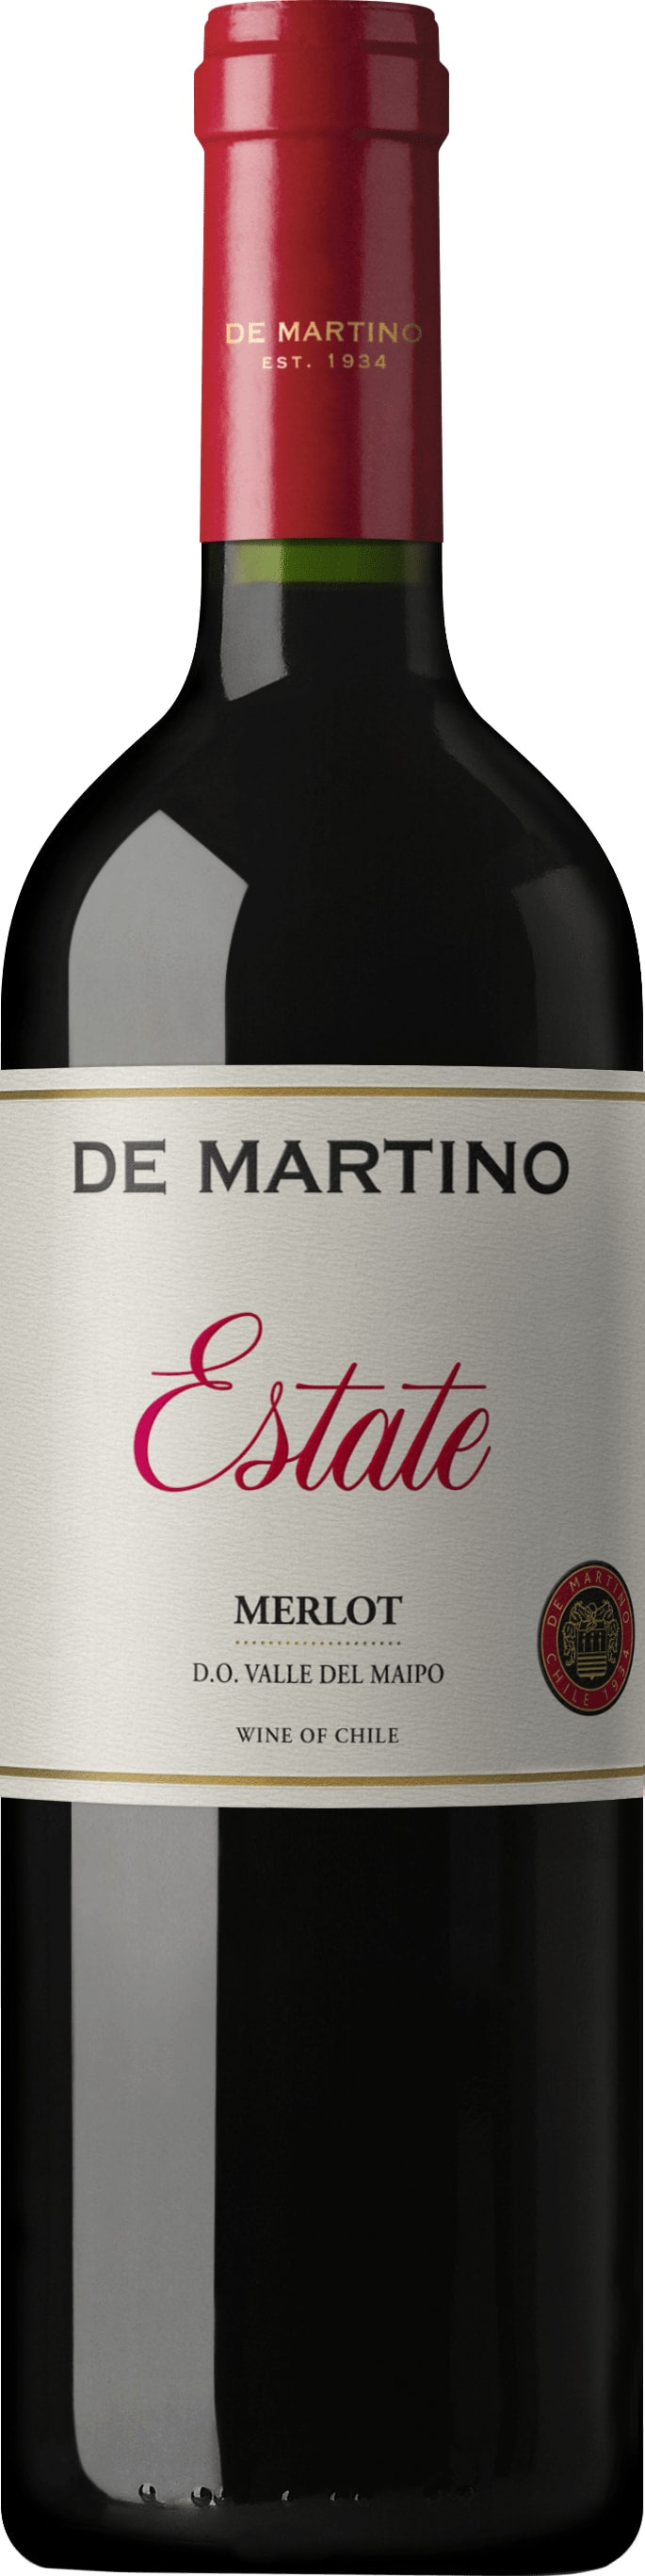 De Martino Estate Merlot 2022 75cl - Buy De Martino Wines from GREAT WINES DIRECT wine shop